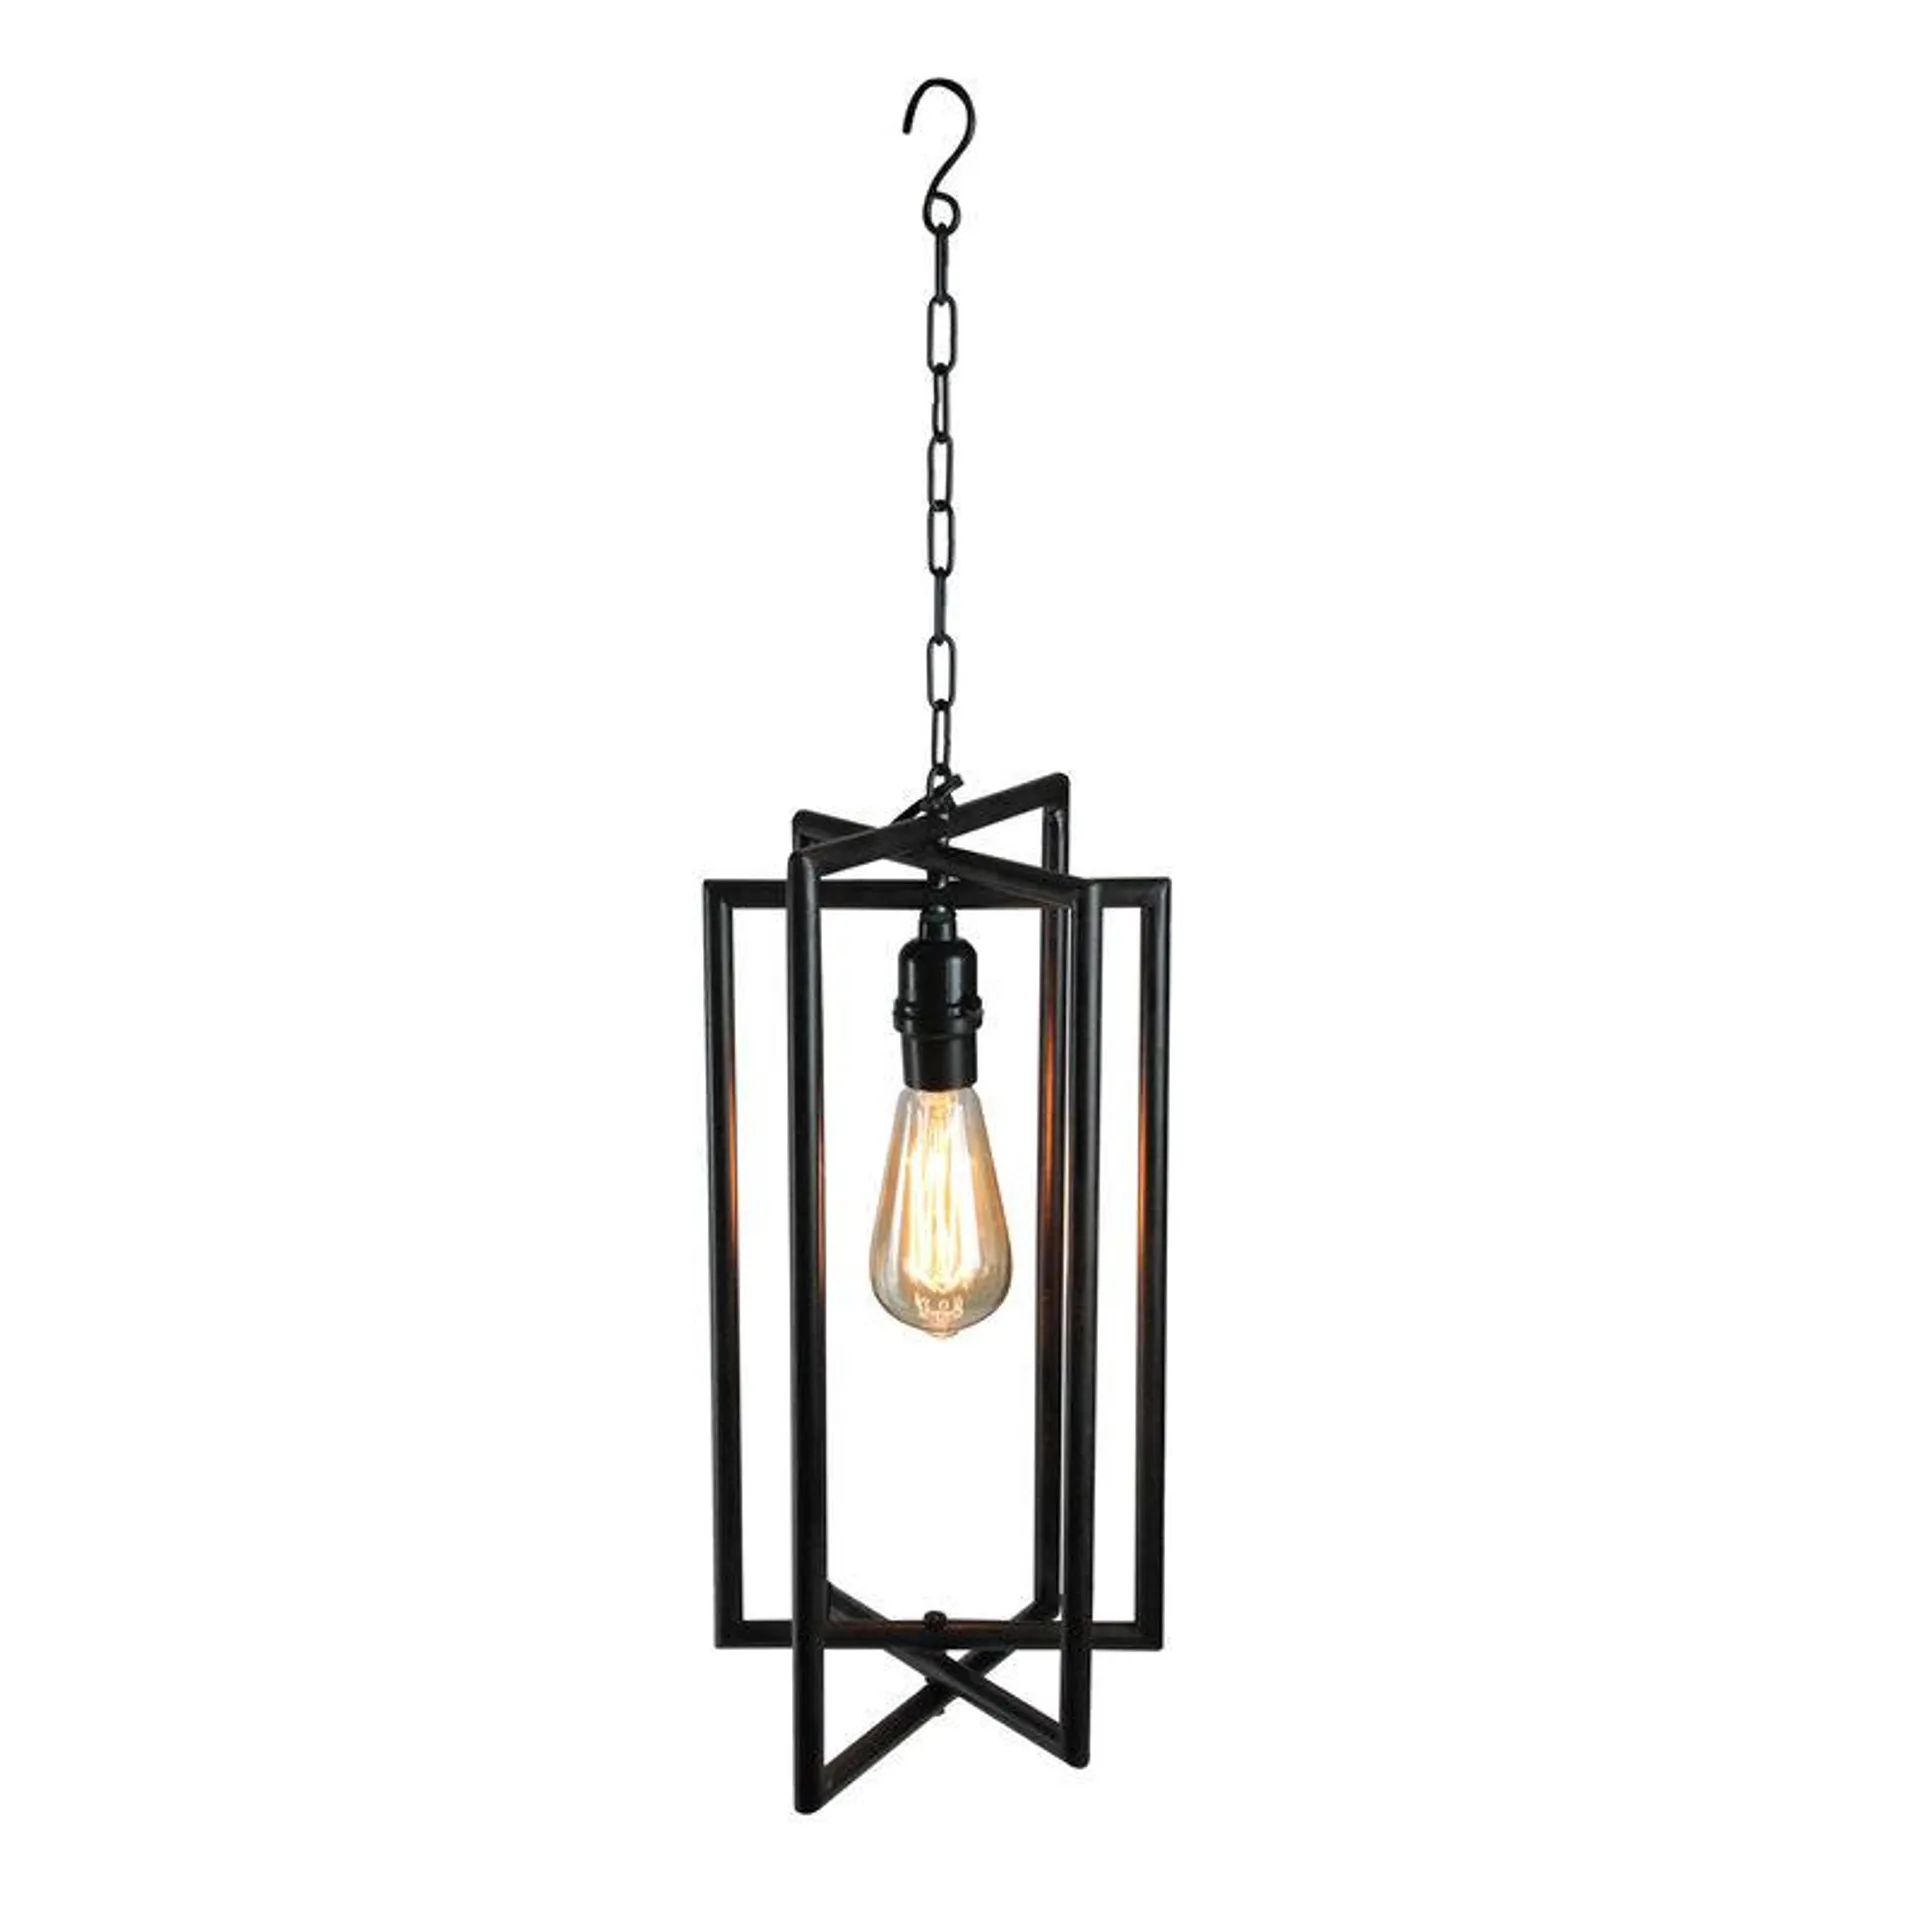 28" Black Rectangular Iron Caged Electric Pendant Hanging Lamp with Edison Style Bulb